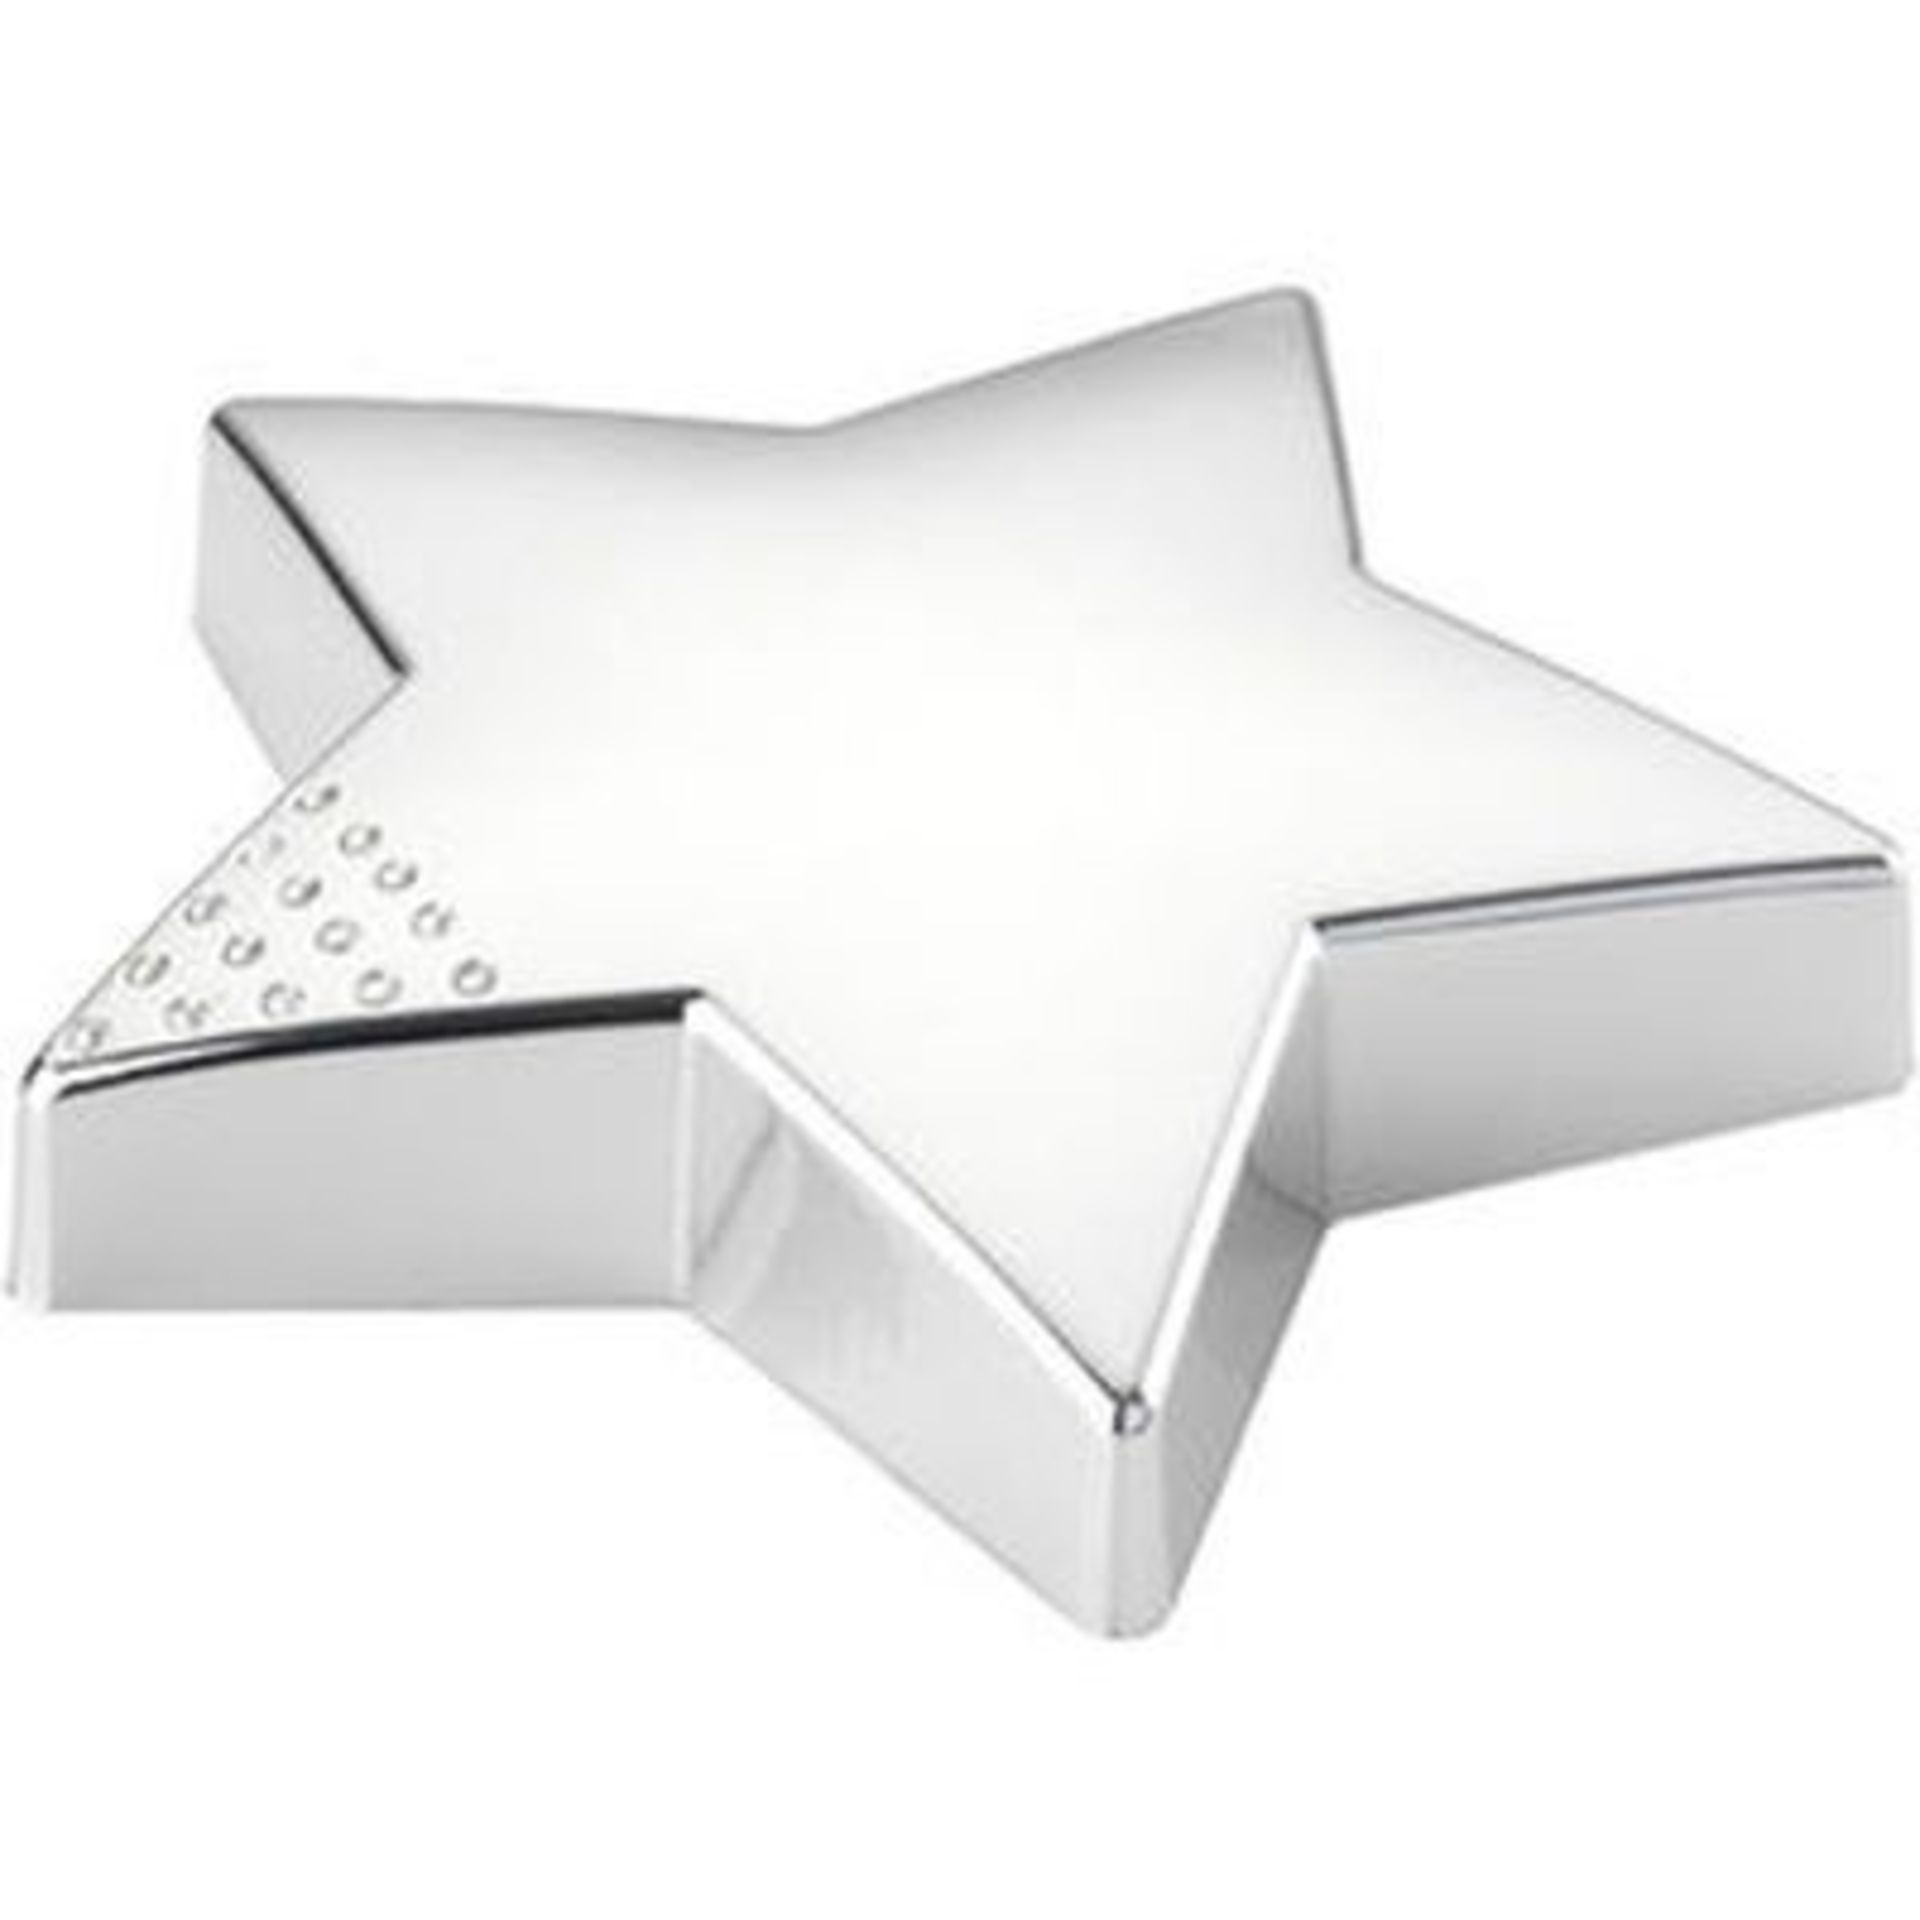 10 x Ice London Luxury Silver-Plated Paperweights - Made With Swarovski Elements - Brand New & - Bild 4 aus 5